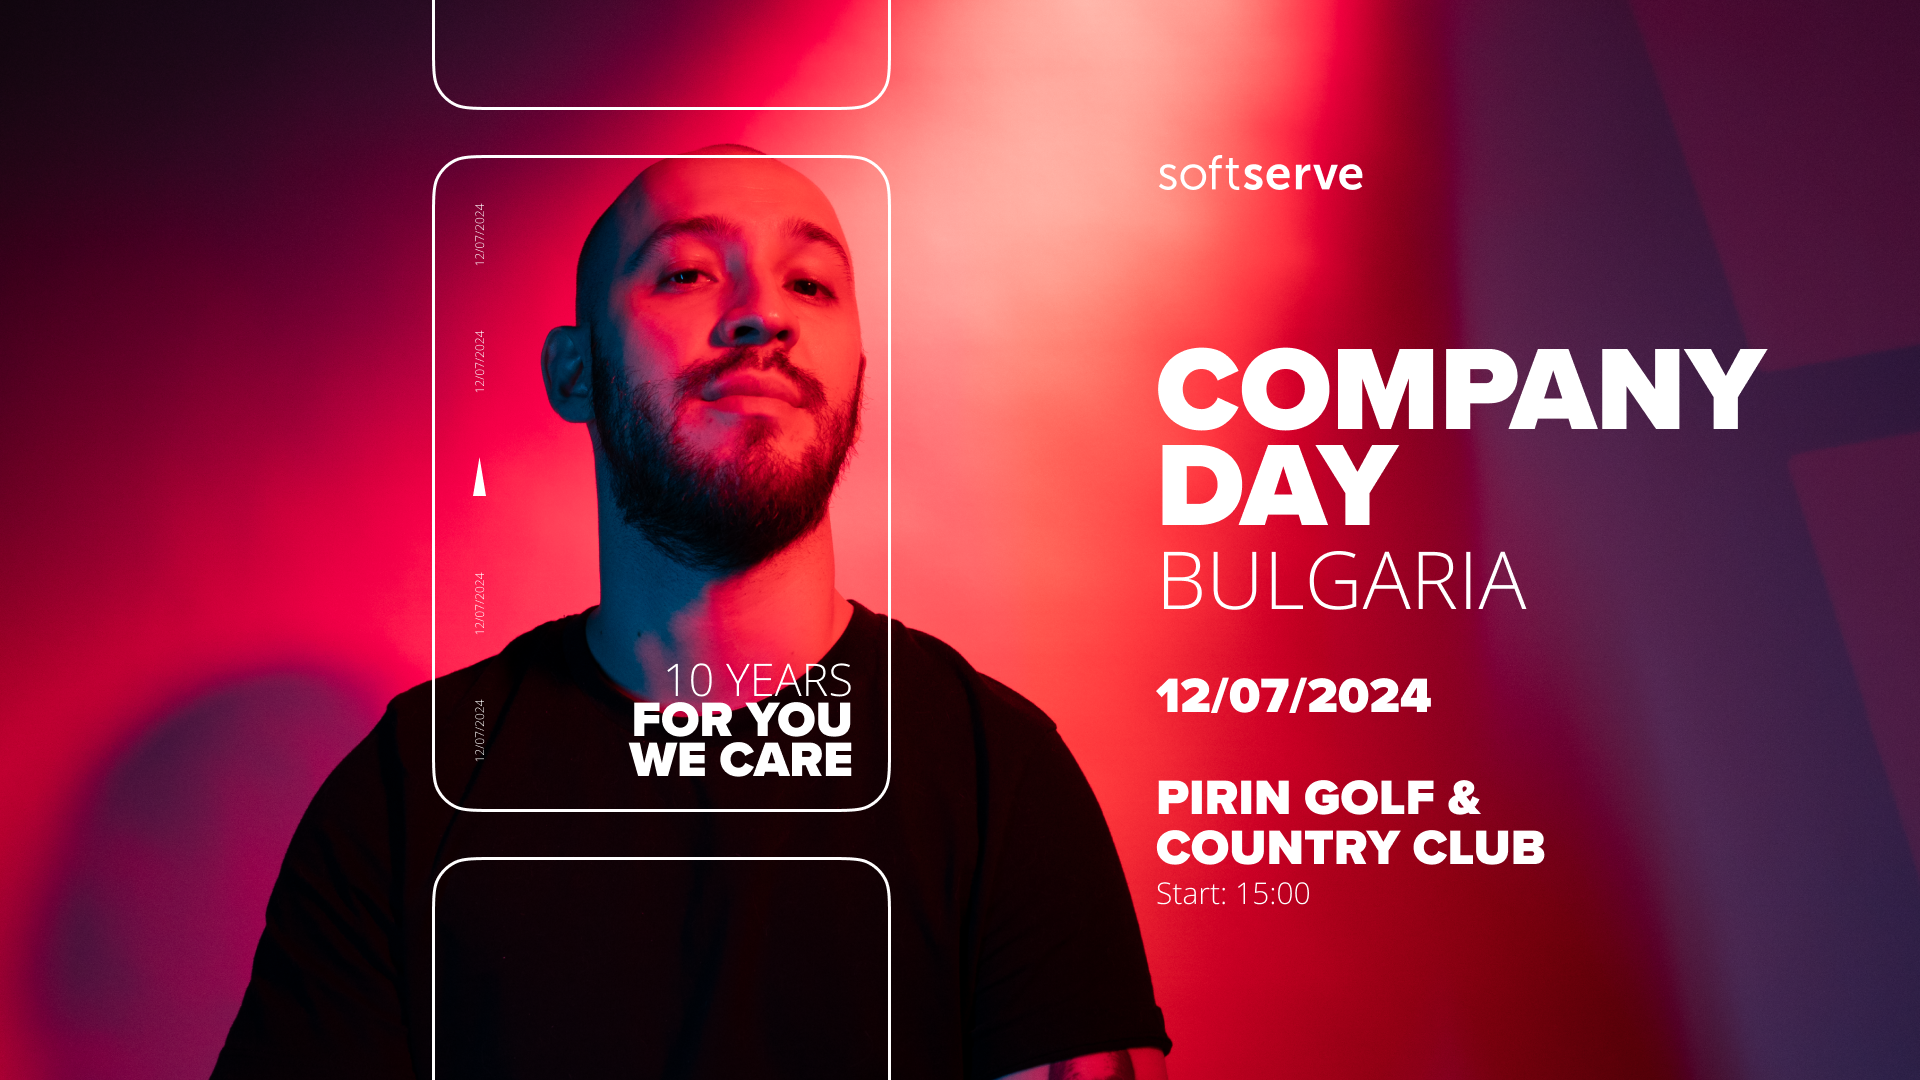 Bulgaria - Company day 2024